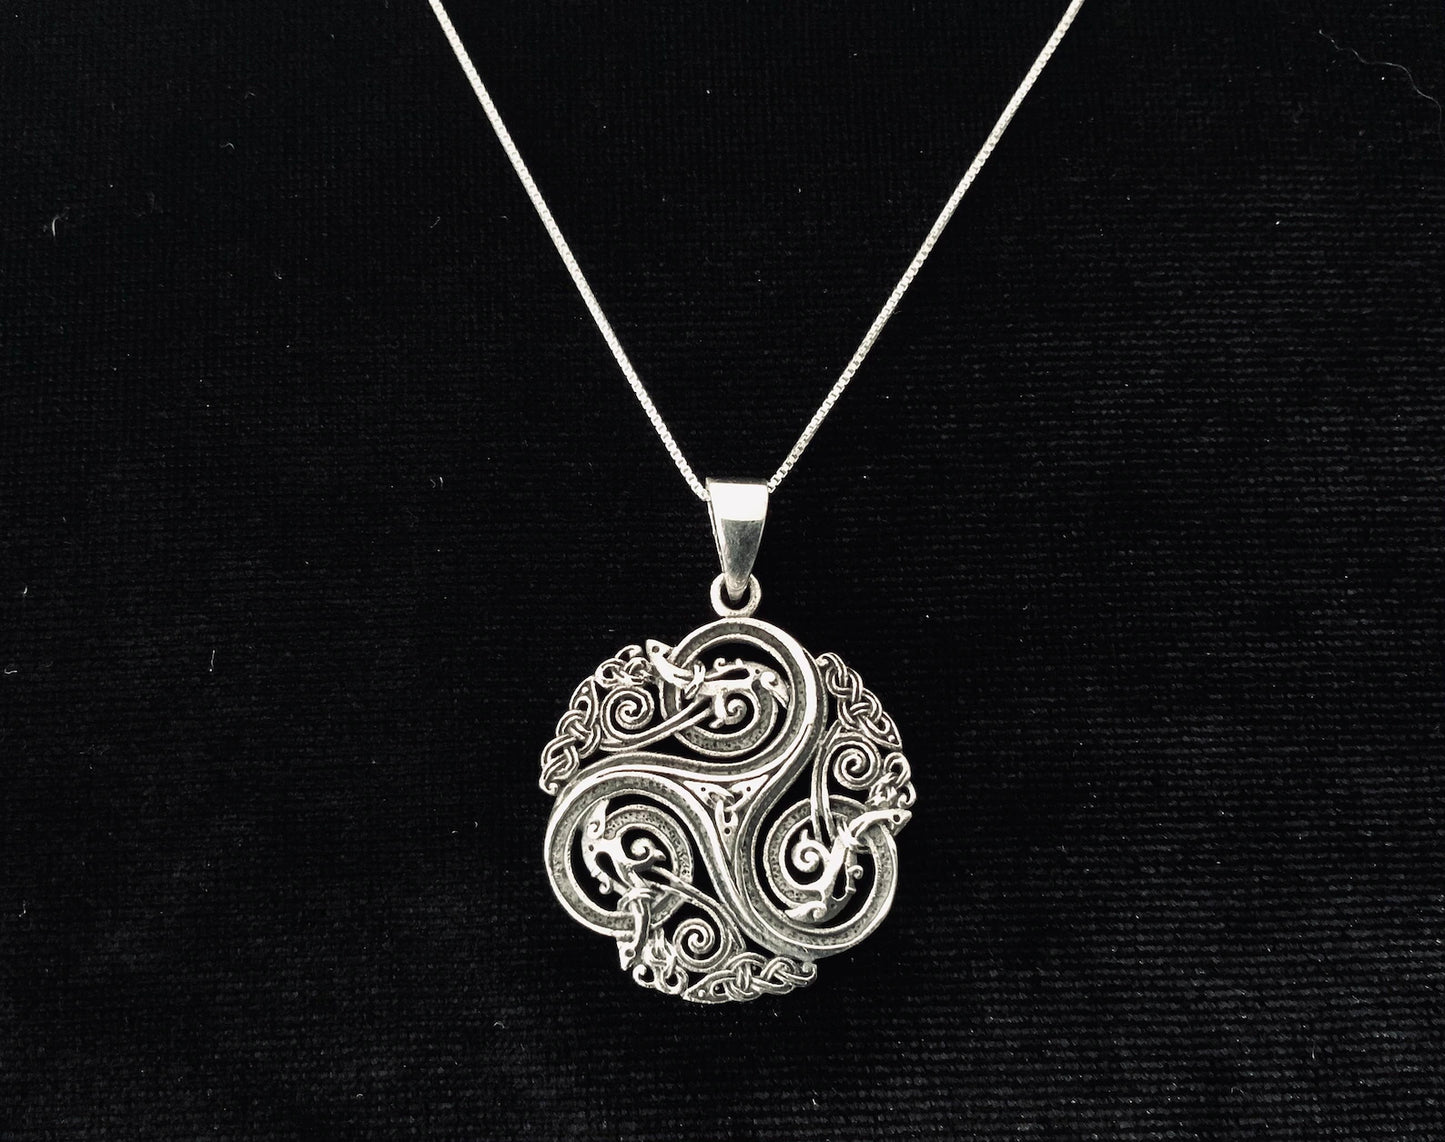 Large Handcast 925 Sterling Silver Celtic Triskele Triple Spiral Pendant w/ Entwined Celtic Dragons Necklace